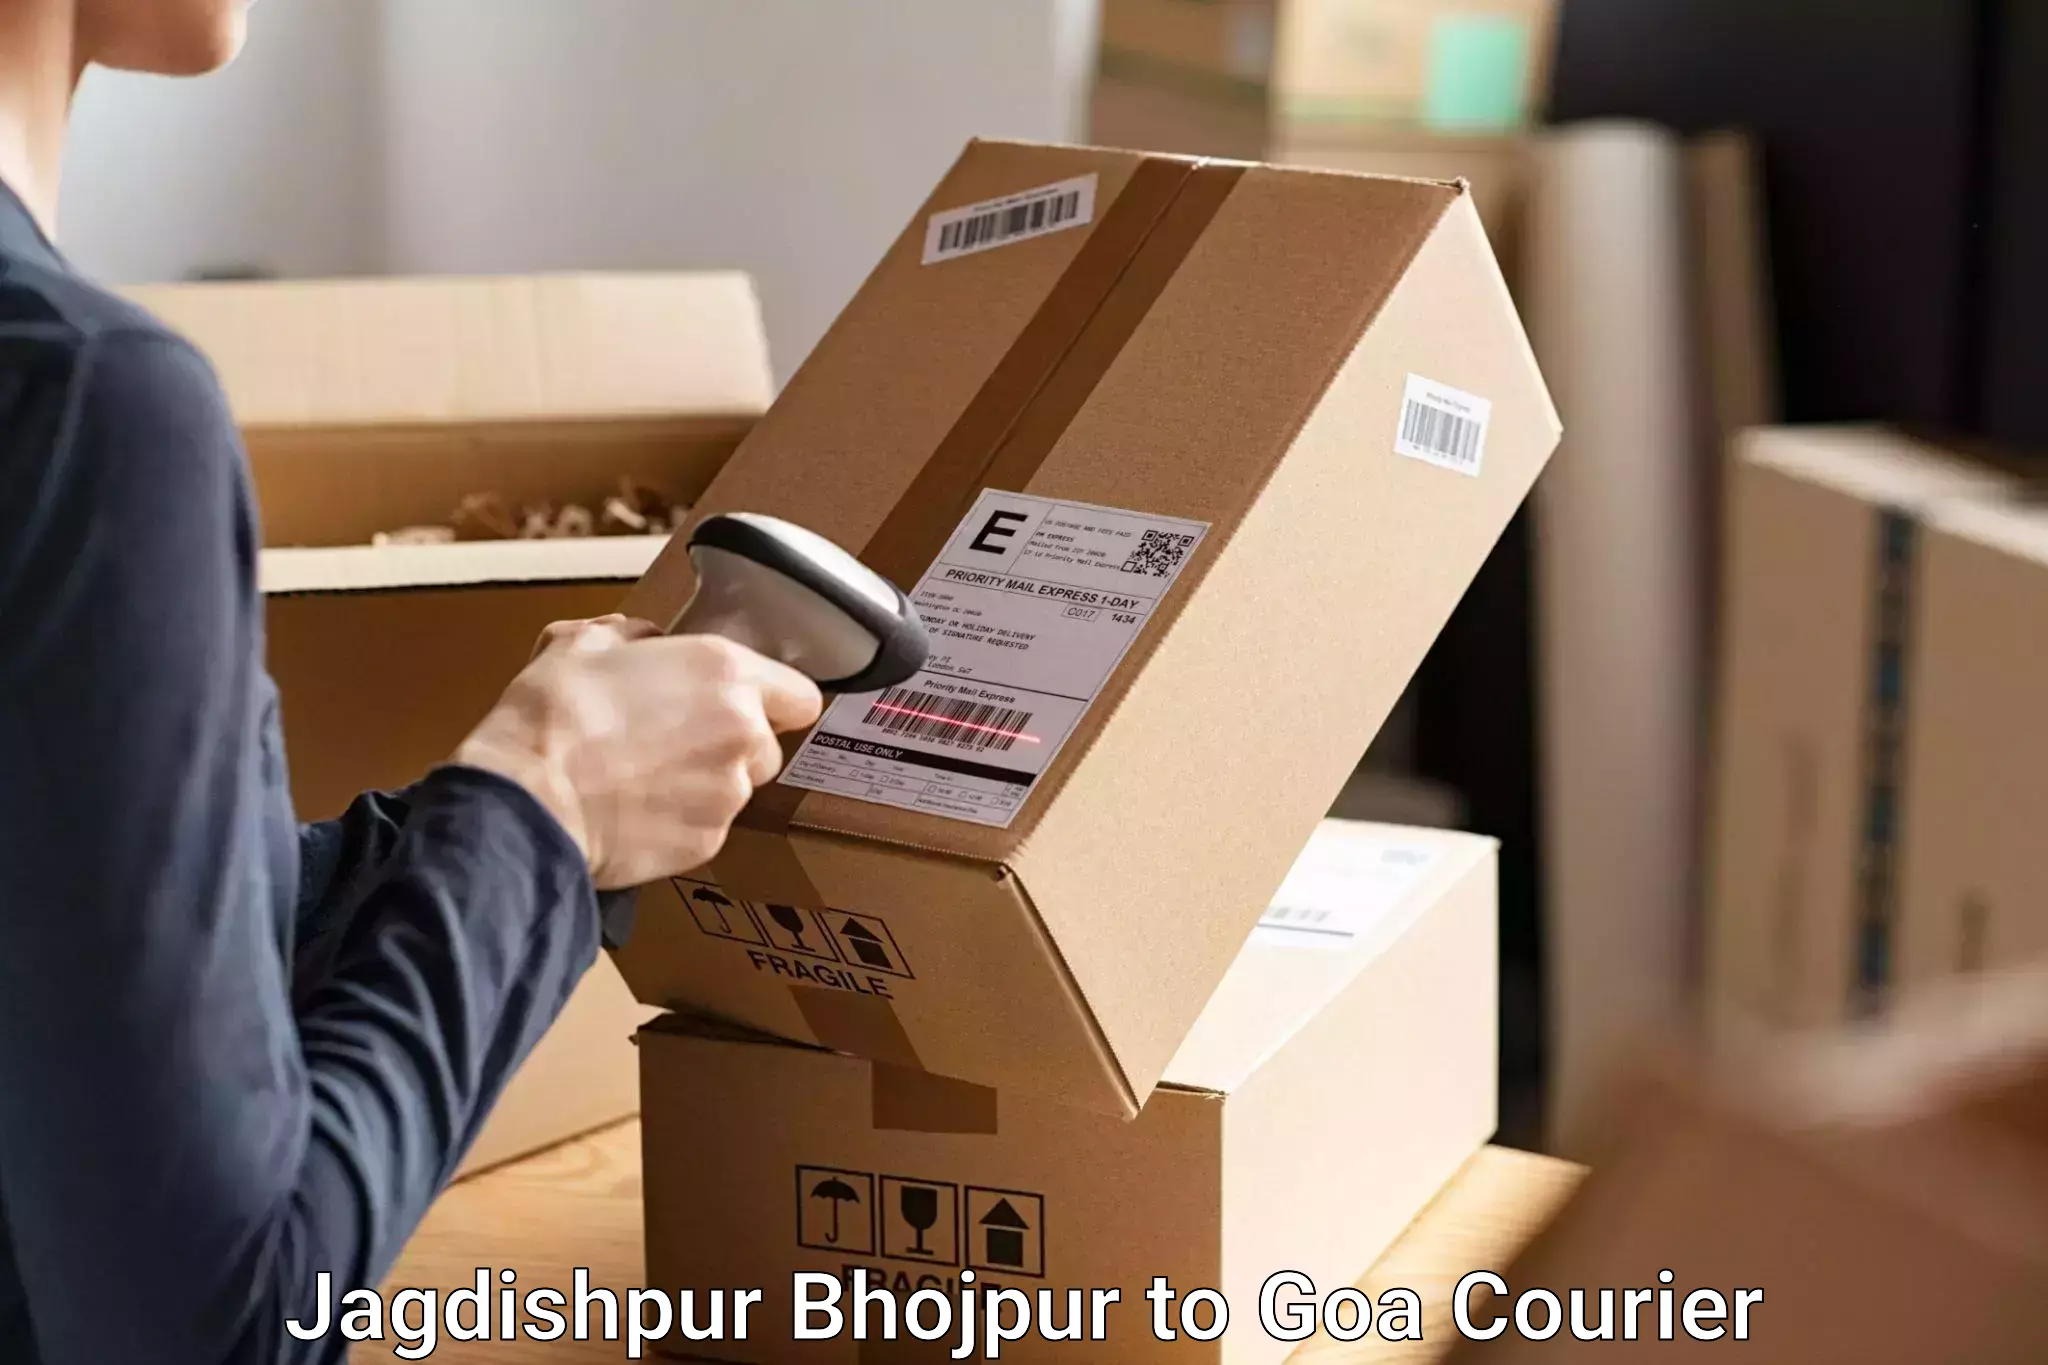 Luggage transfer service Jagdishpur Bhojpur to South Goa